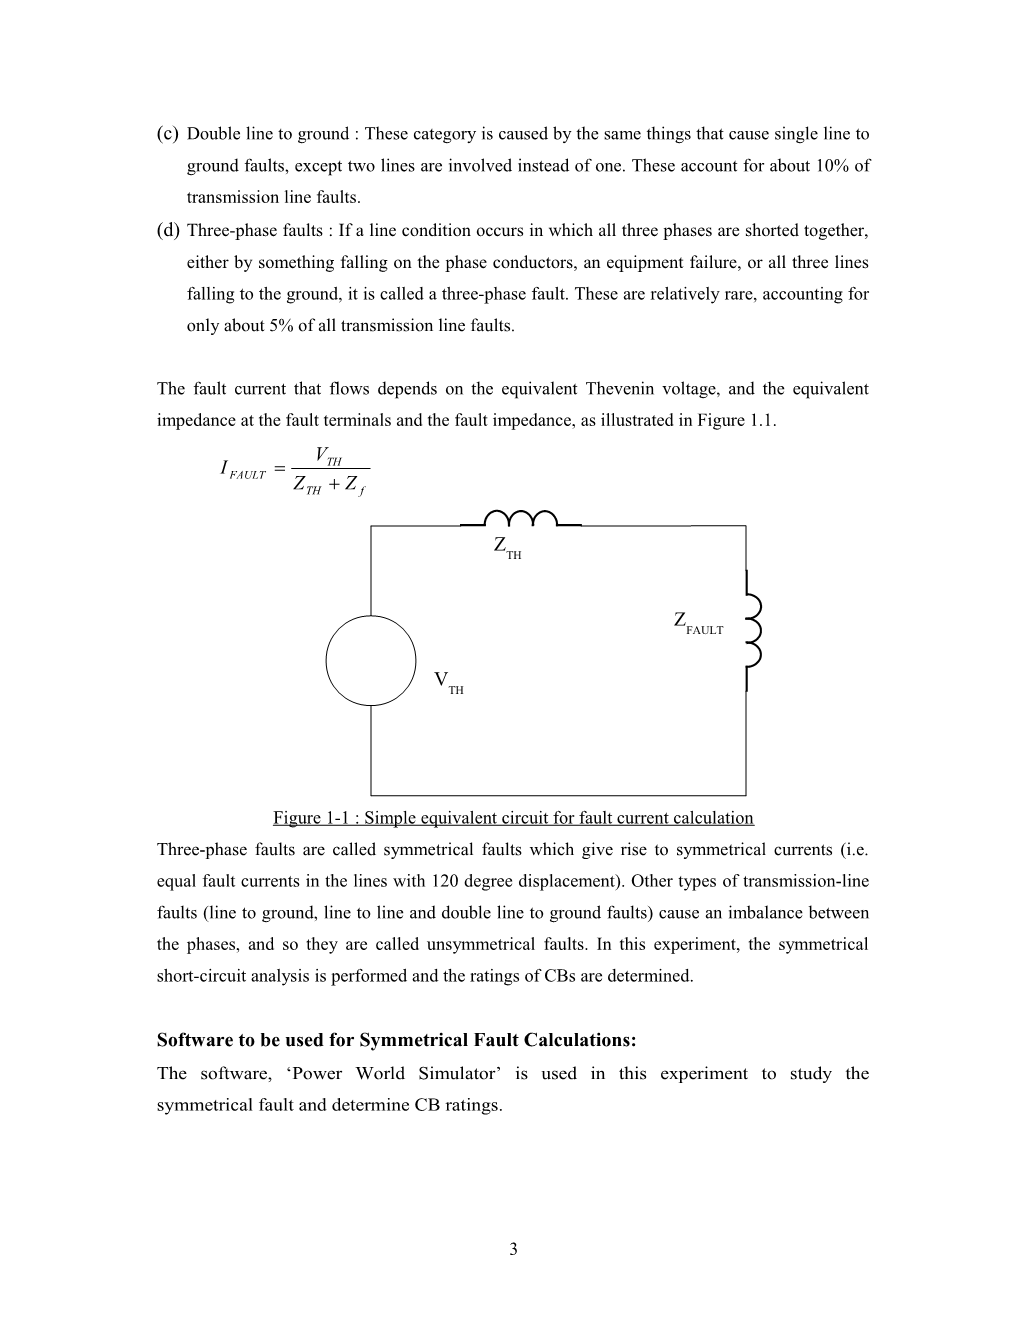 EET 1 - Symmetrical Short Circuit Analysis and Determination of Circuit Breaker Rating